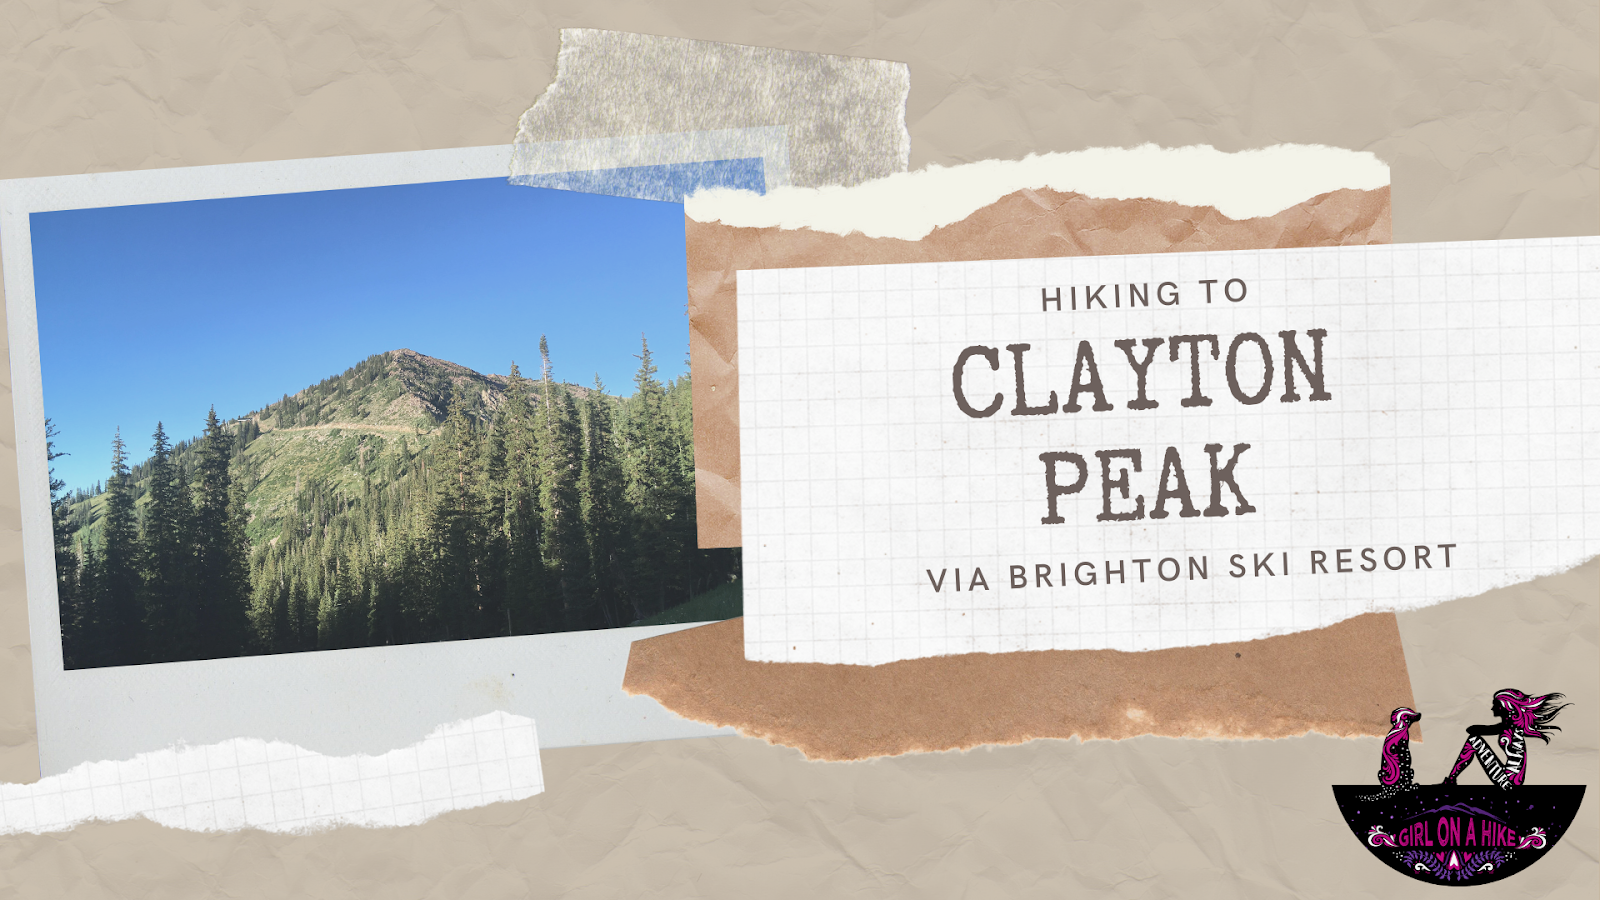 Hike to Clayton Peak via Brighton Ski Resort